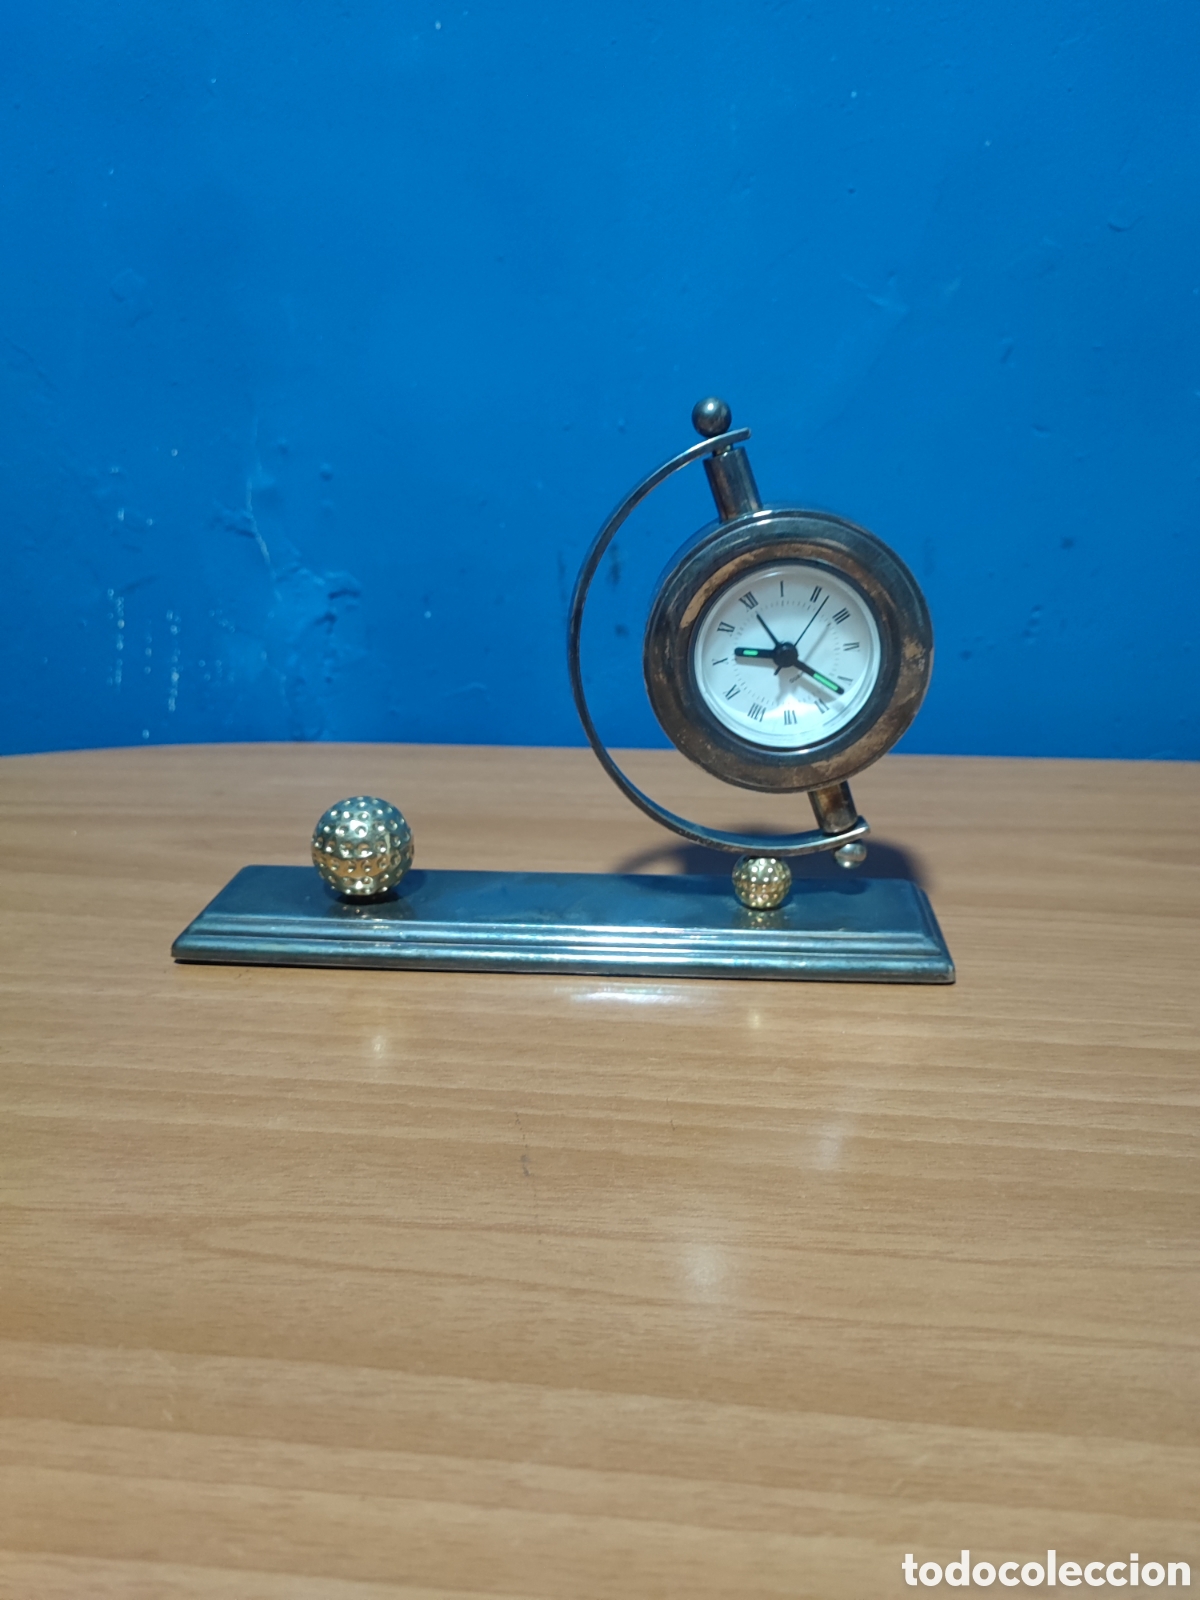 basura Subir Polo bonito reloj giratorio plateado medidas 23x16 - Compra venta en  todocoleccion